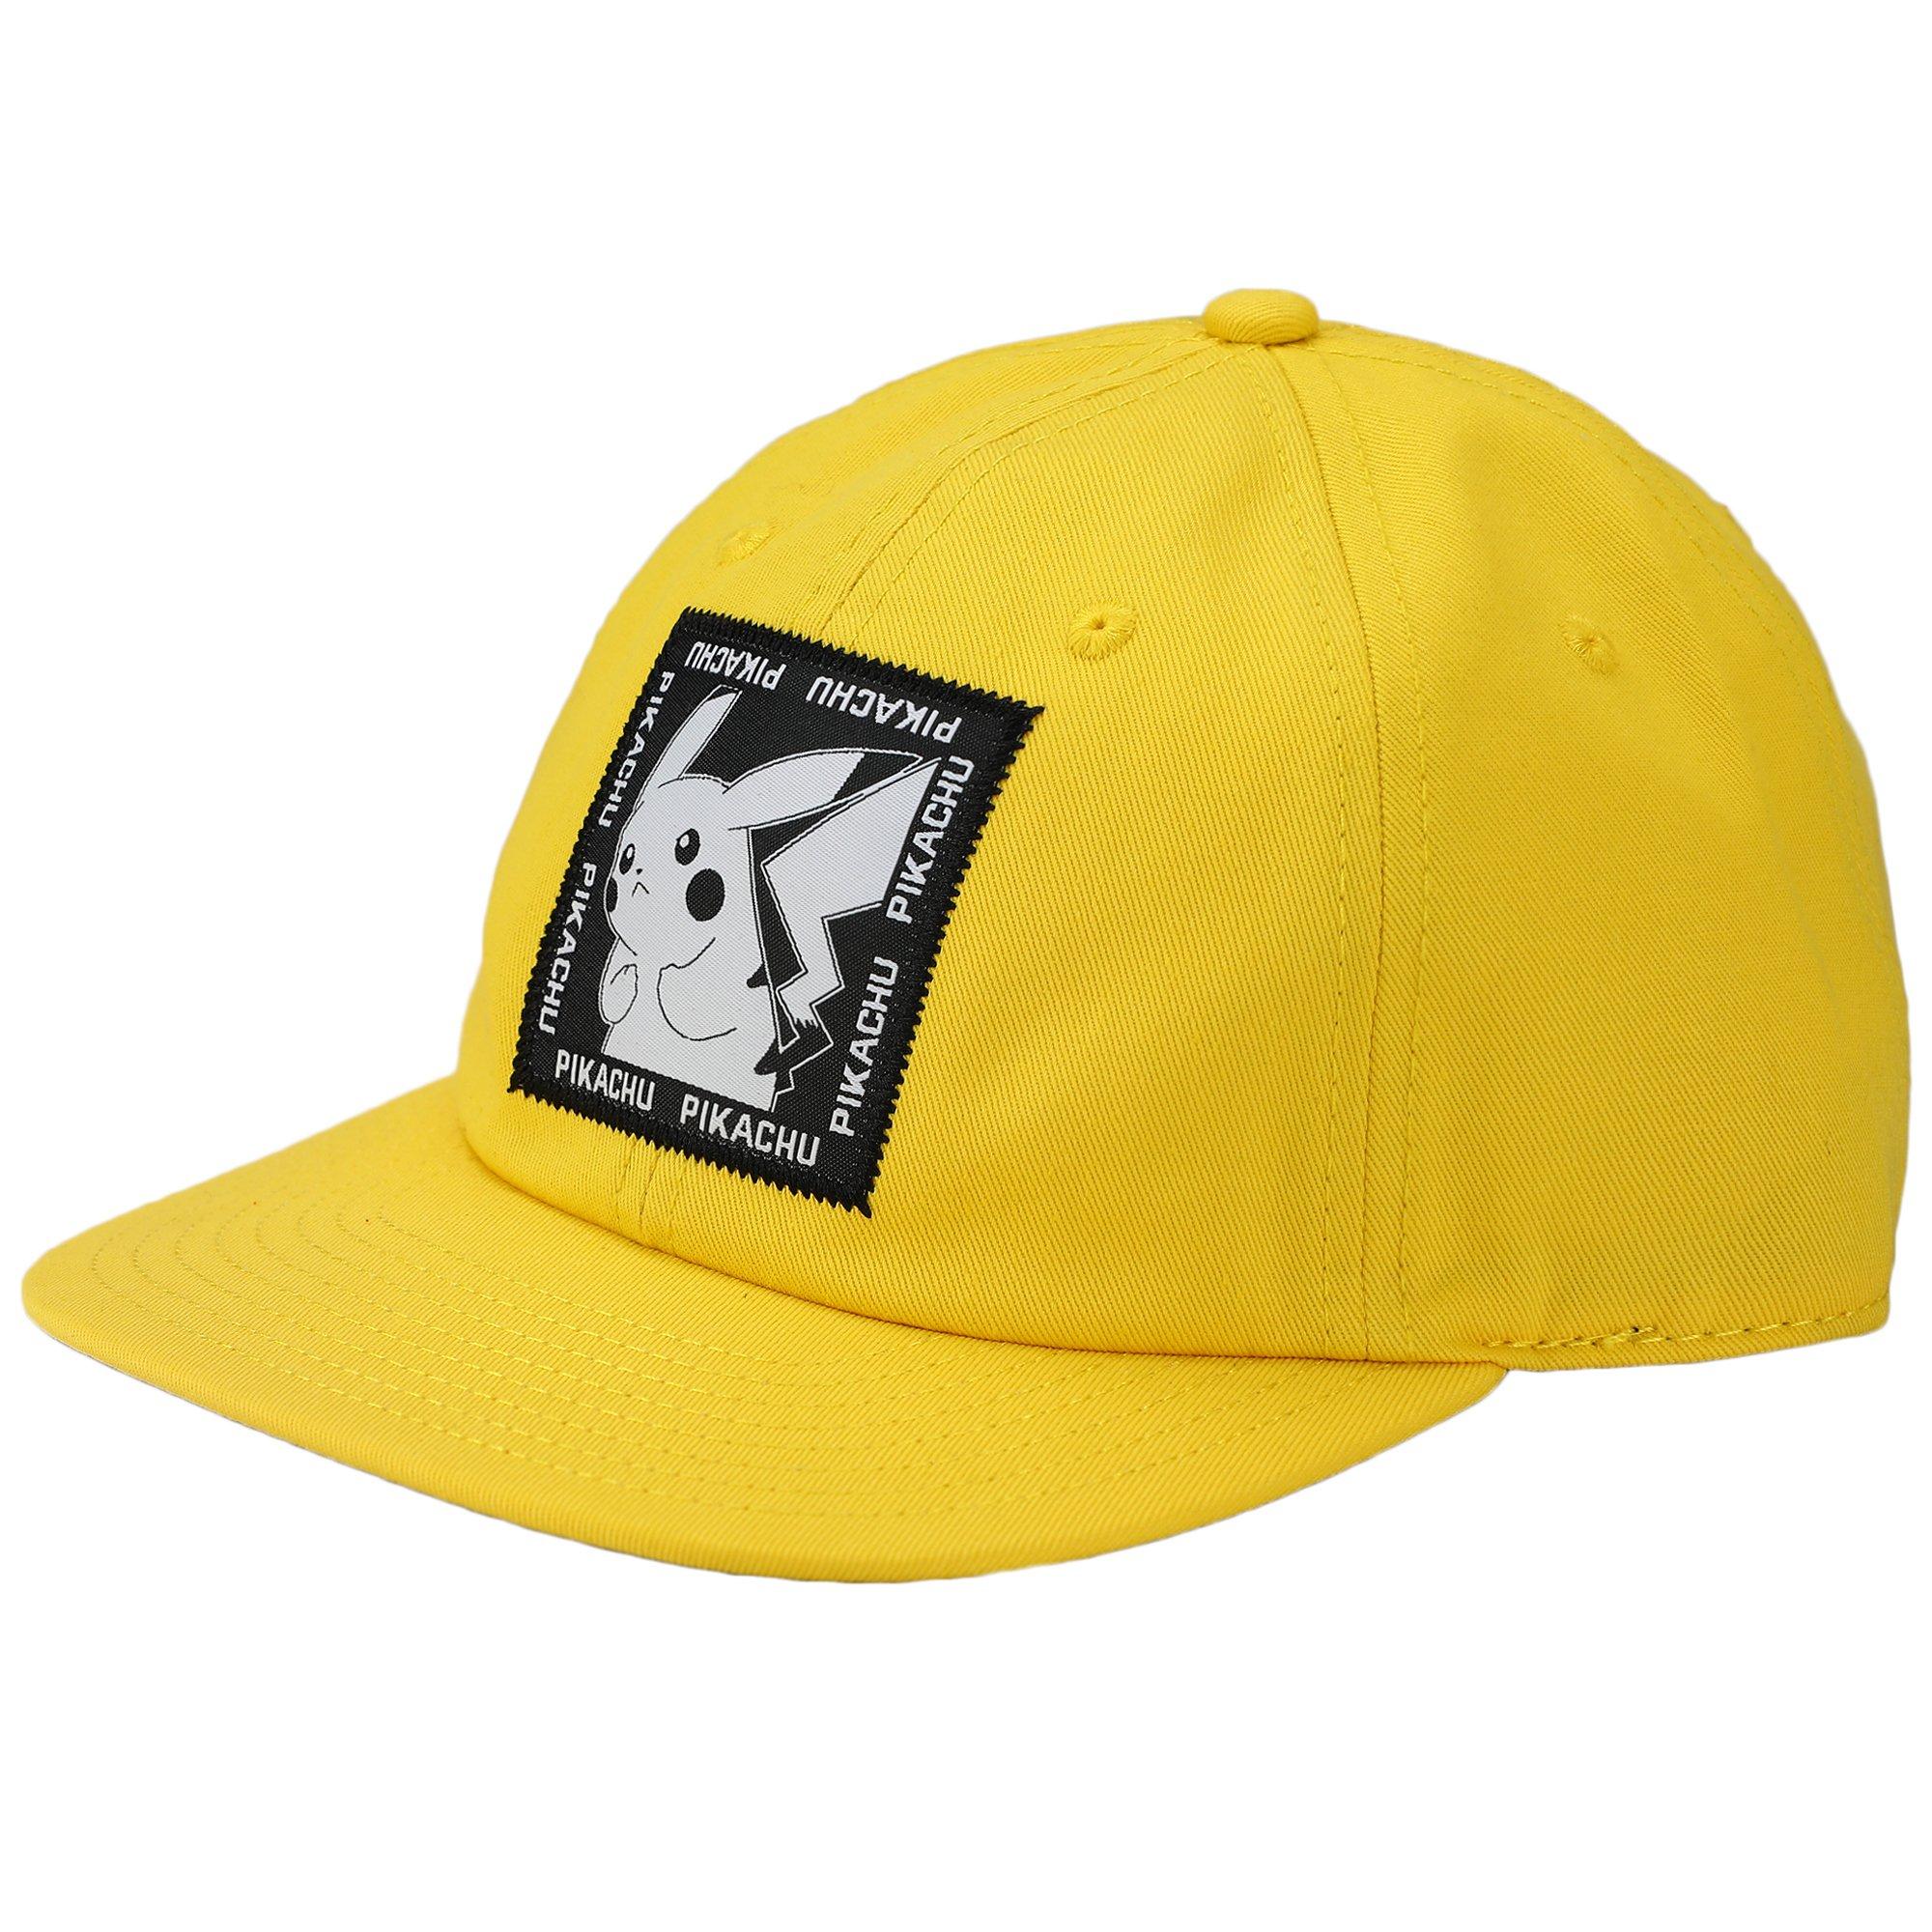 Pokemon Pikachu Slouch Flatbill Yellow Men's Adjustable Dad Hat